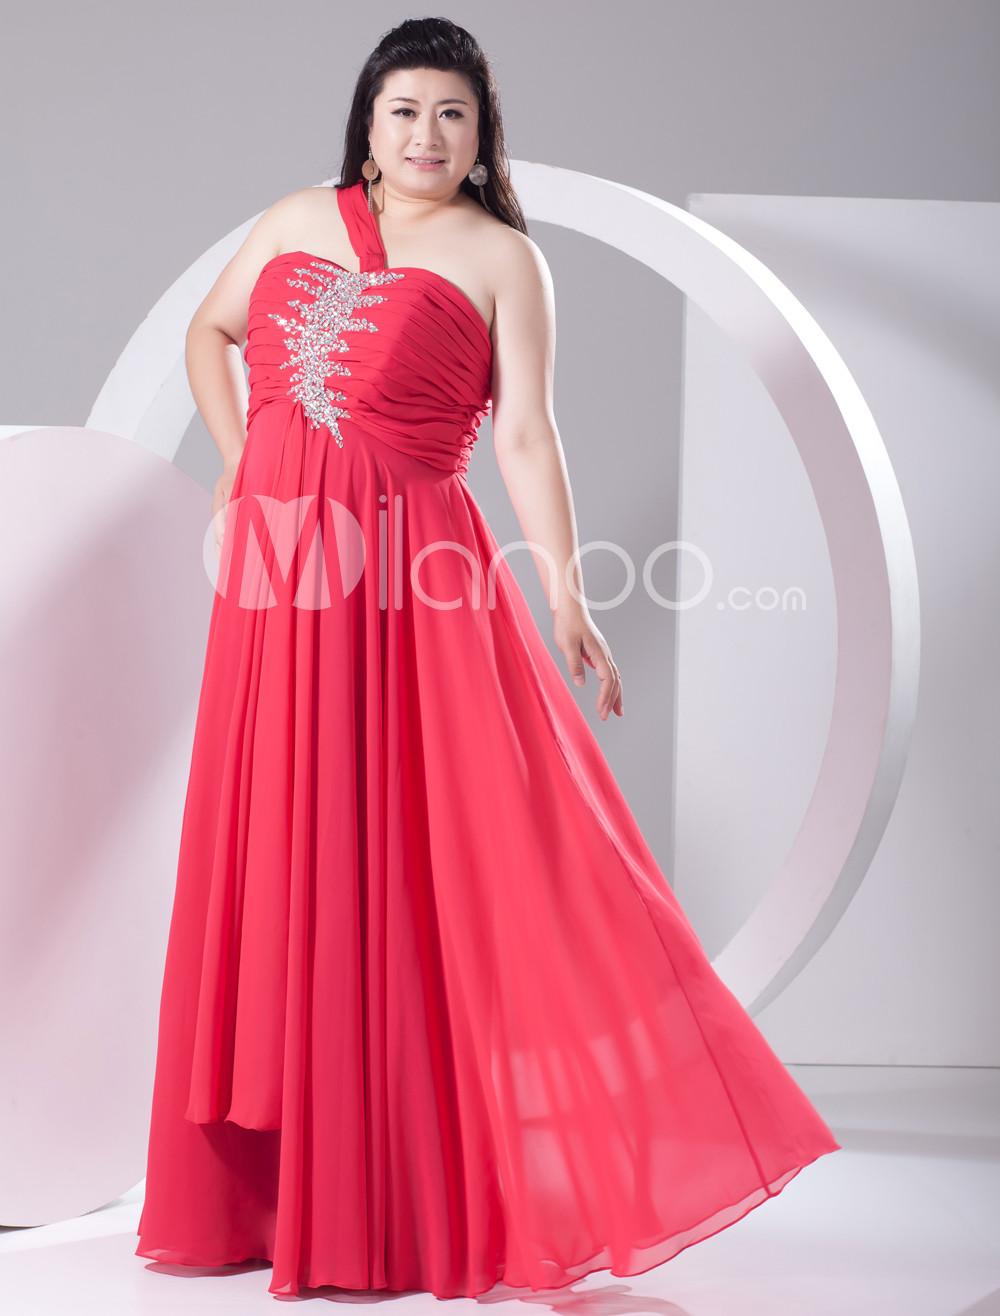 Foto Dulce 2013 estilo rojo gasa rebordear uno - hombro Plus tamaño vestido de fiesta